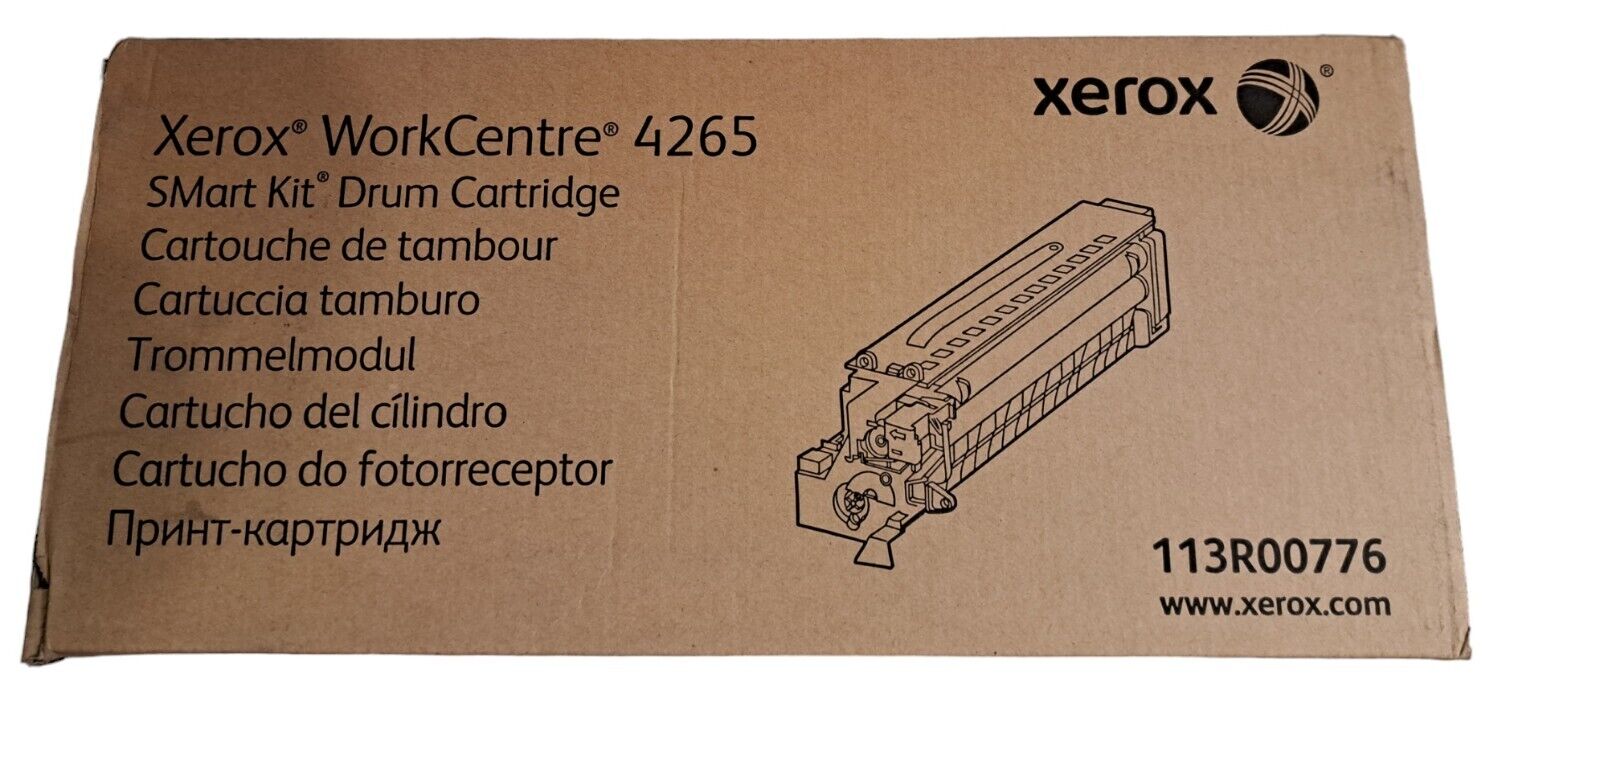 Xerox WorkCentre 4265 Drum Kit Cartridge (113R00776)